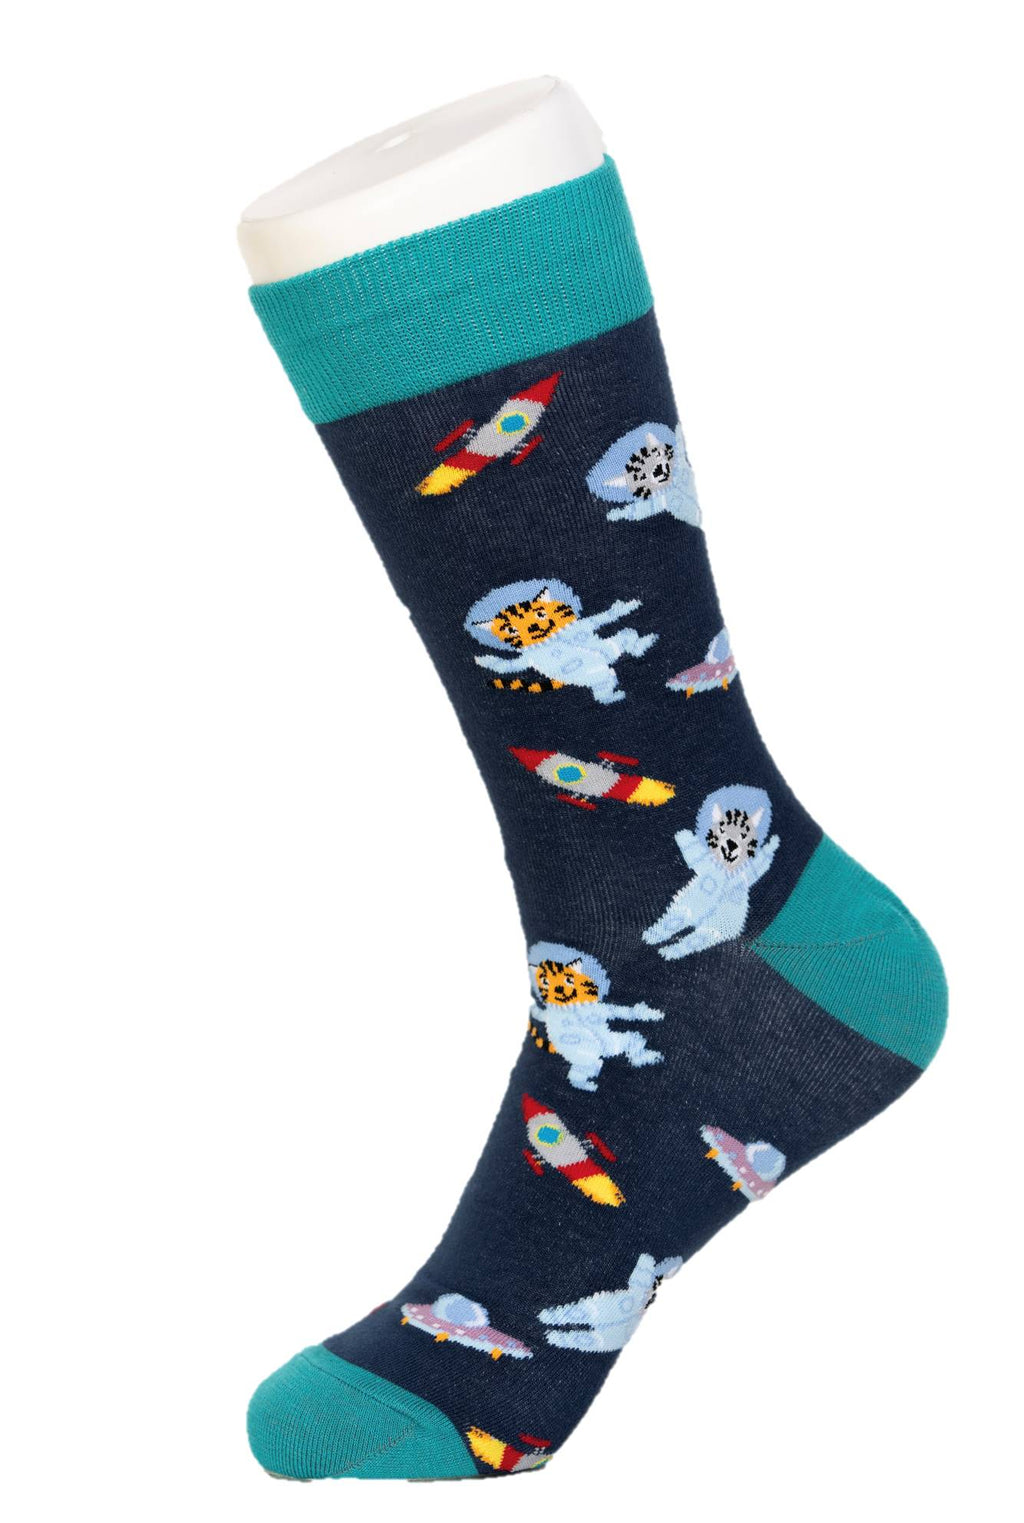 Space Cats Novelty Socks